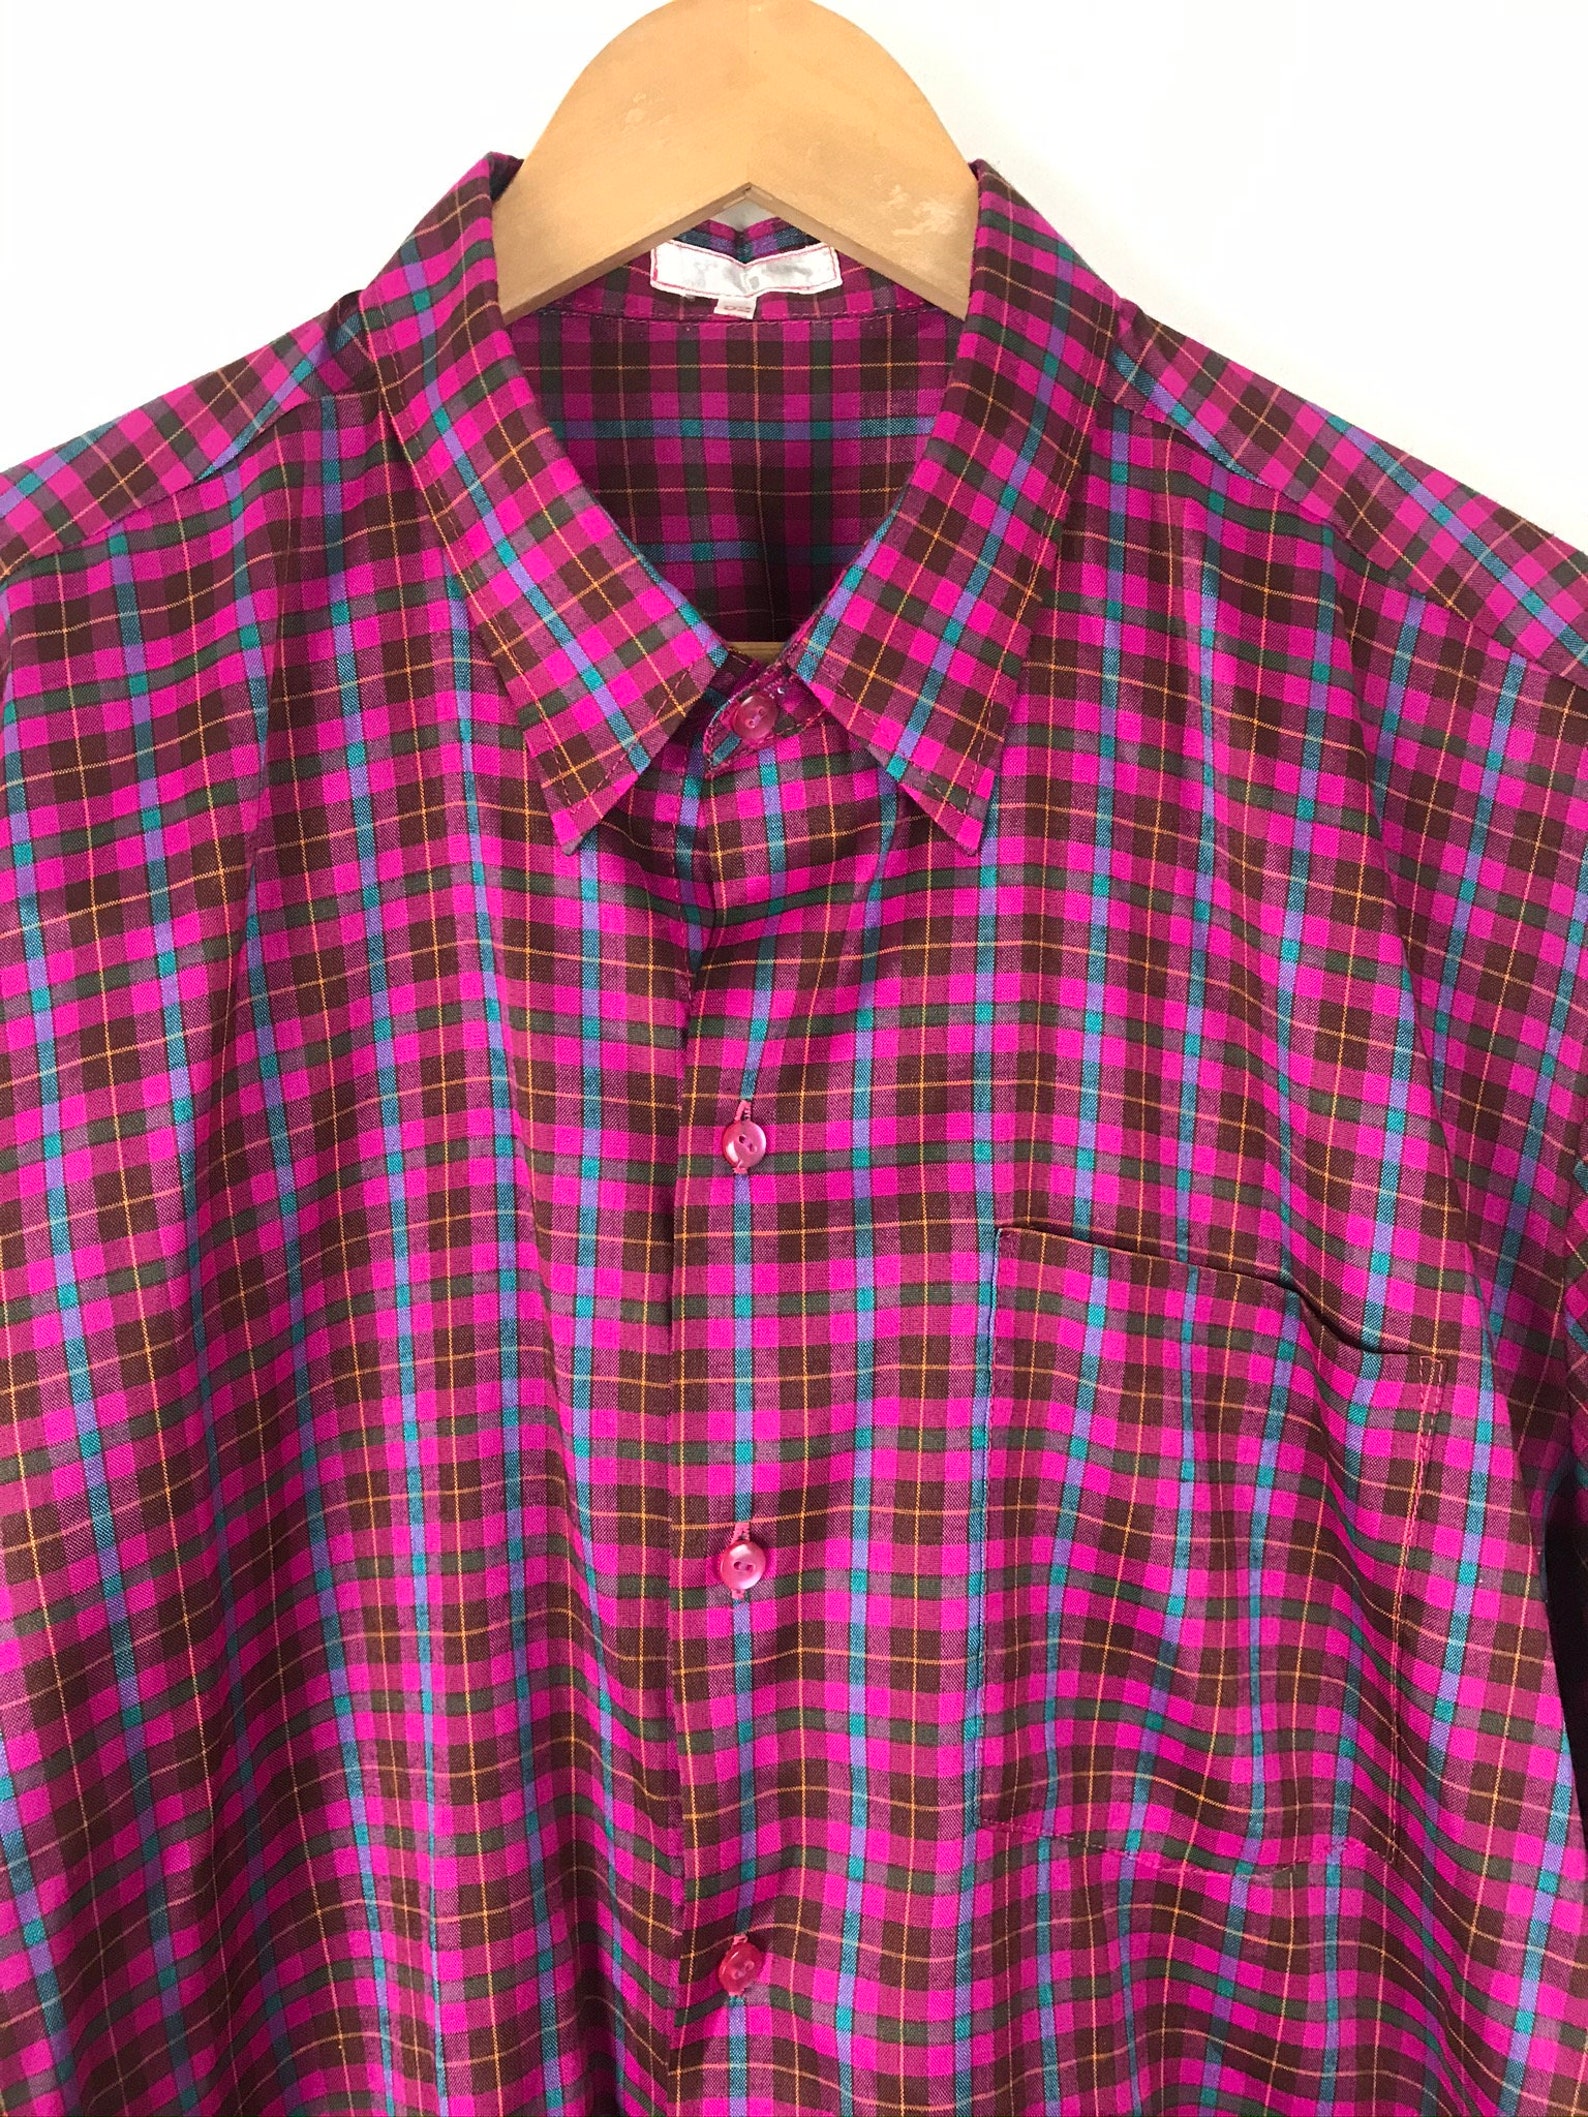 Vintage Mens Plaid Shirt Hot Pink & Blue Plaid Button Down - Etsy